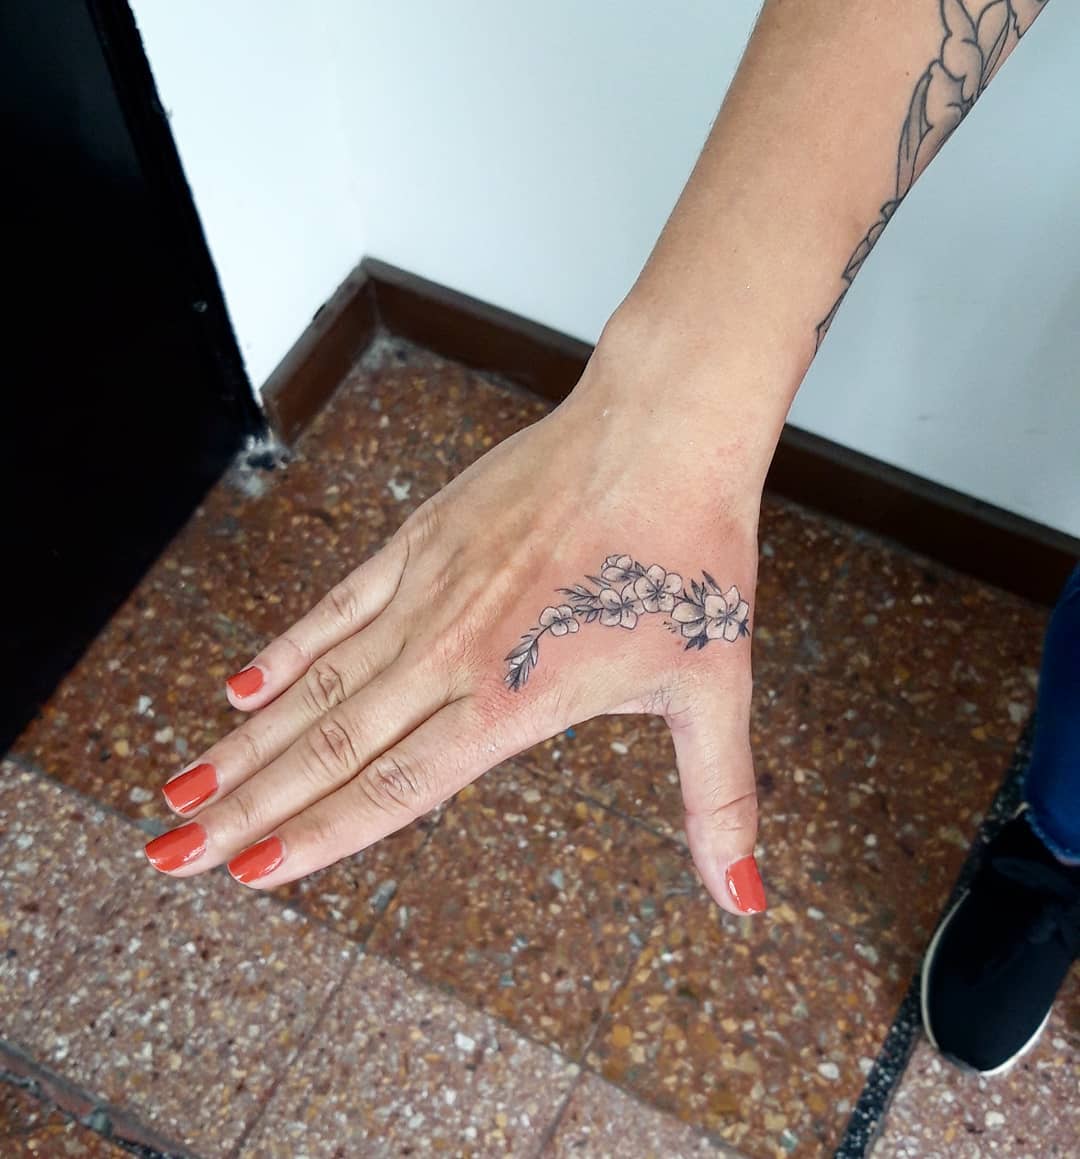 Rail Side Tattoo Co  navaiam made a solid floral hand piece  tattoo  tattoos girlswithtattoos blackandgreytattoo tat art urbanart  markedsociety tattooartist tattooworld  Facebook